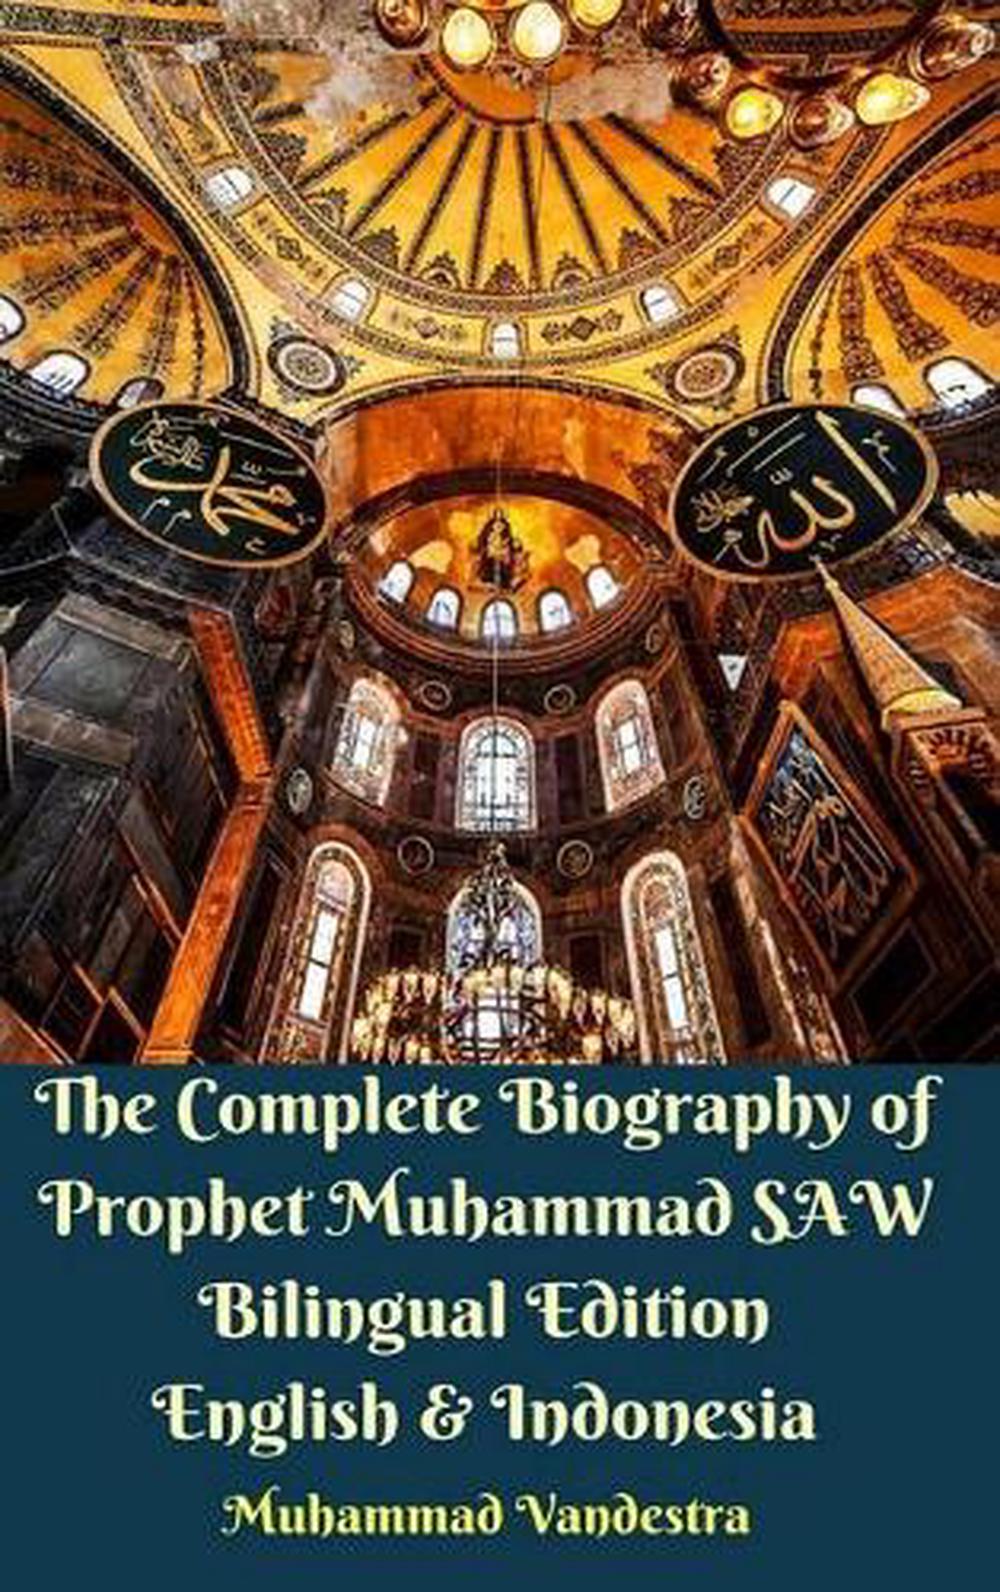 biography of prophet muhammad saw